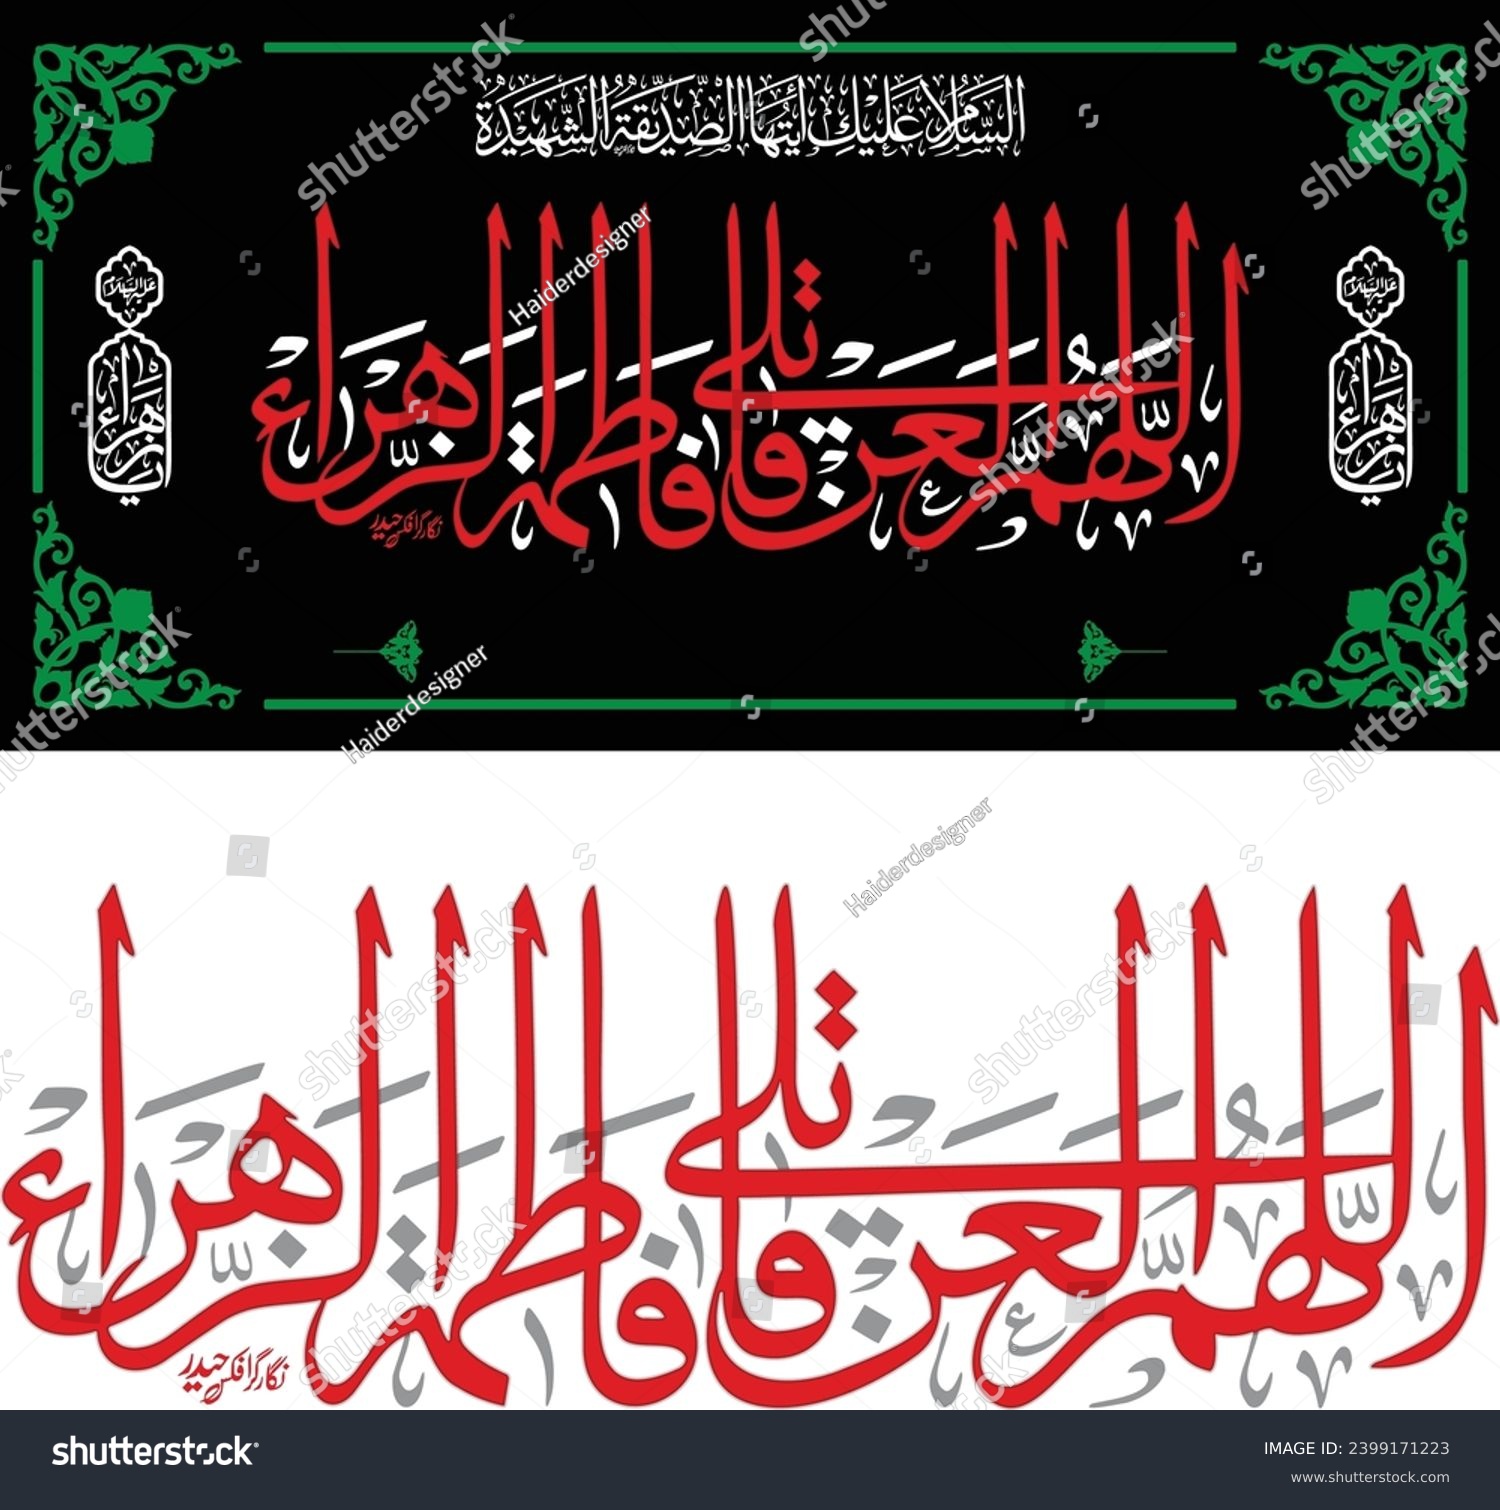 The banner commemorating the martyrdom of Hazrat Fatima Zahra, peace be upon him, is decorated with the phrases Salaam Aleek Iha Sadiqah Al Shahada and Laan Qatala Fatima Al Zahra. #2399171223